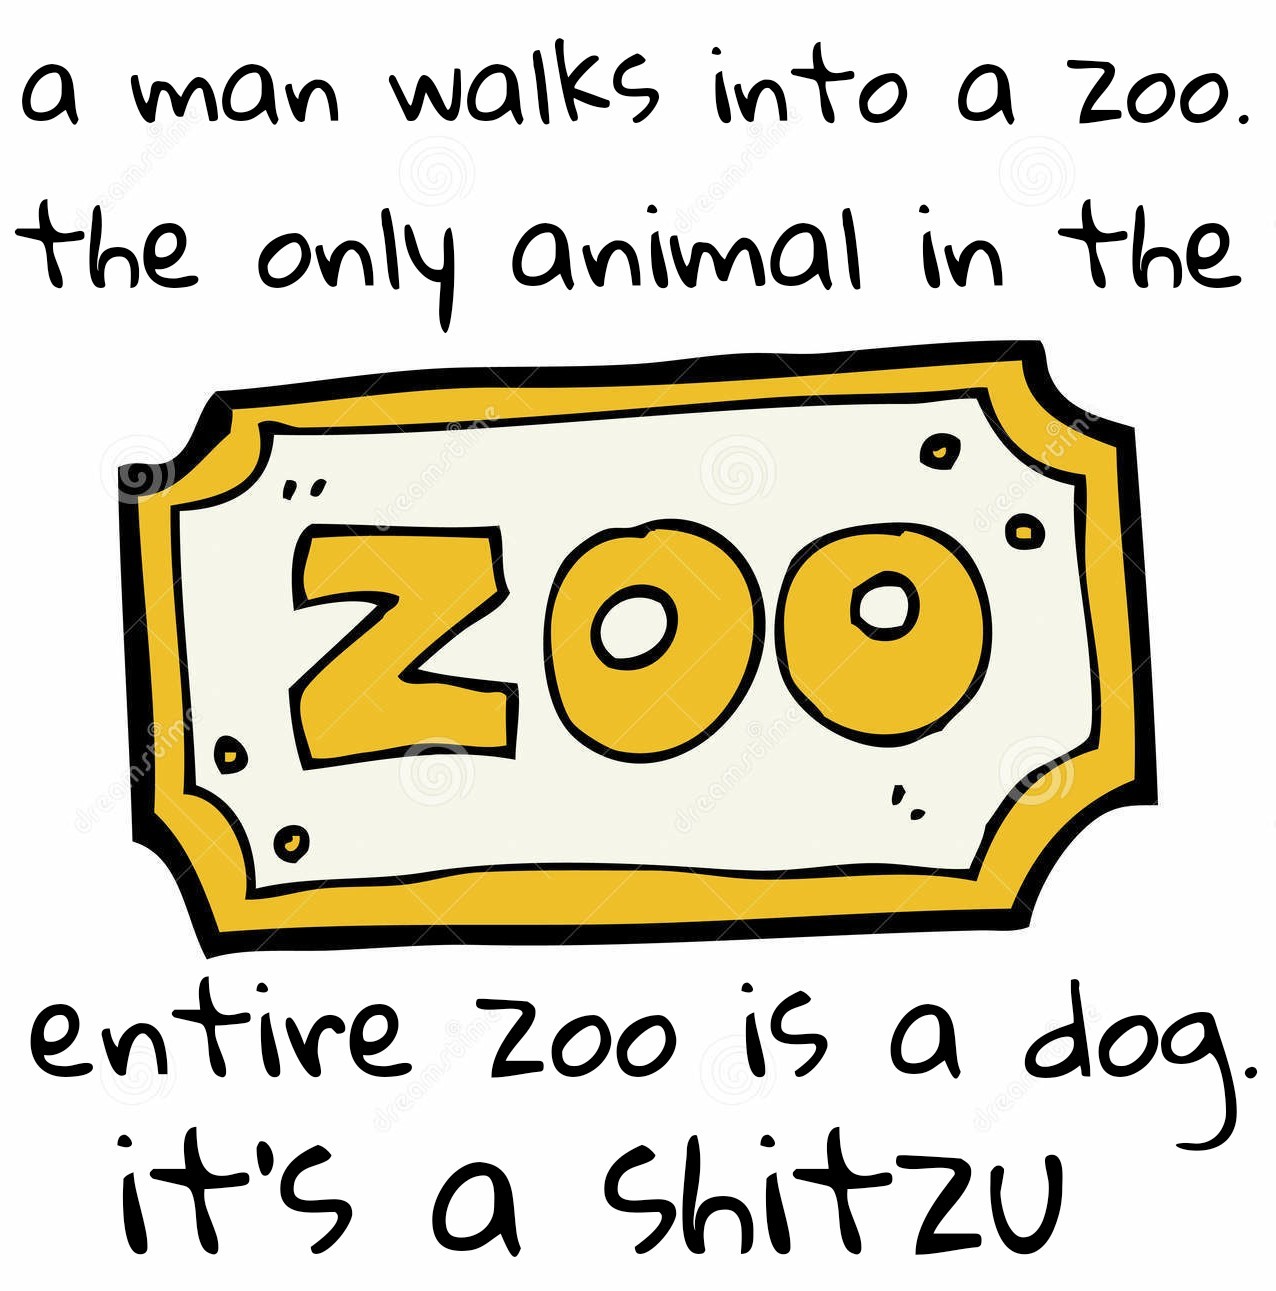 Zoolook - meme